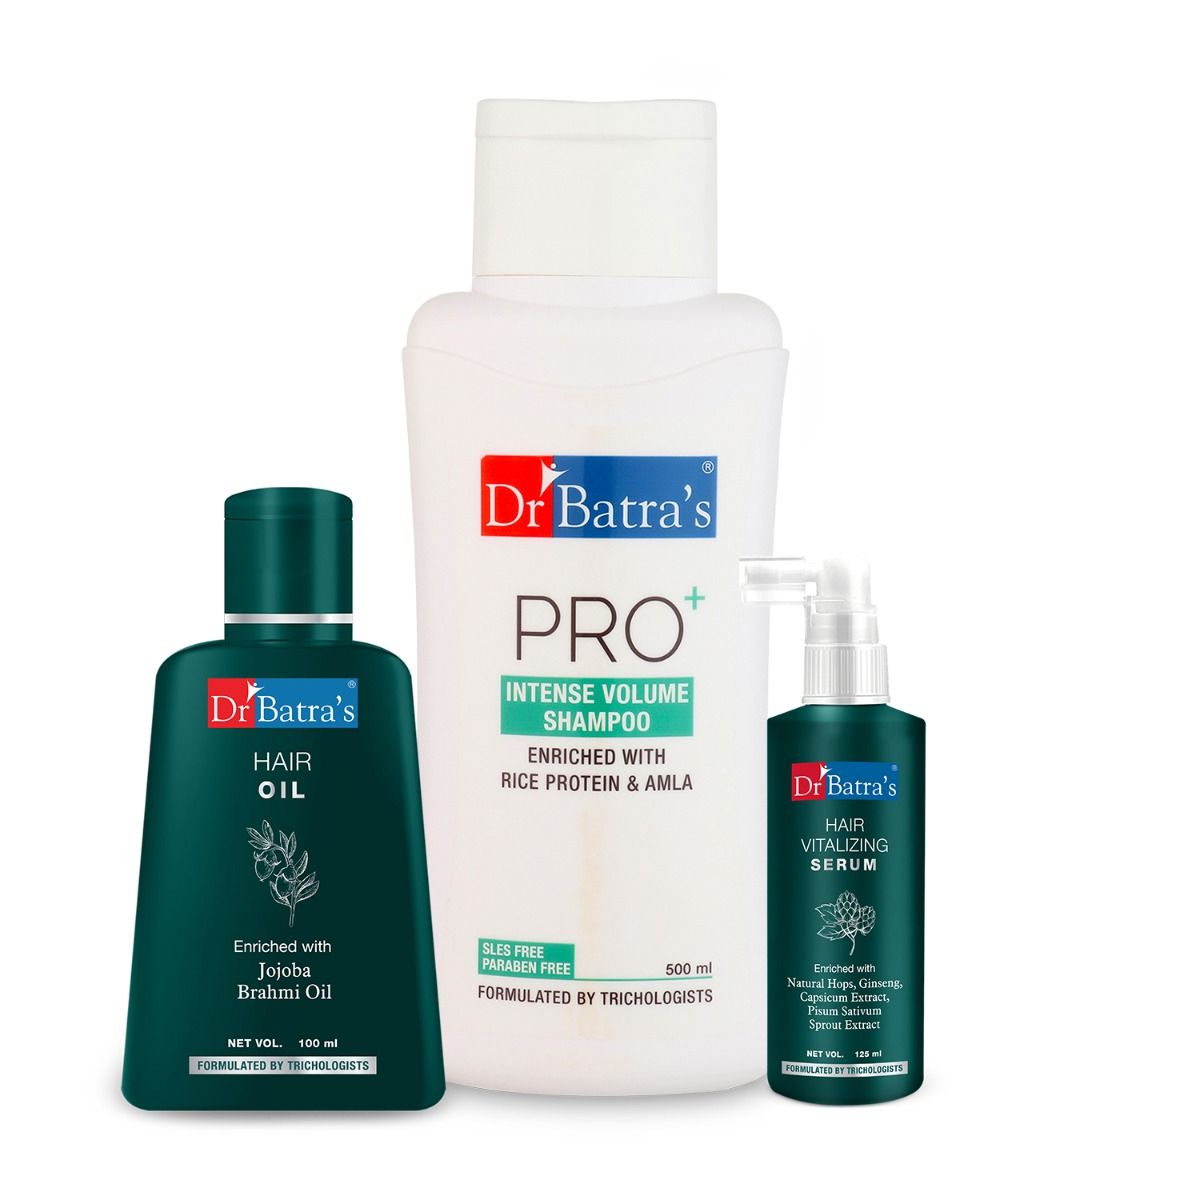     			Dr Batra's Hair Vitalizing Serum, Pro+ Intense Volume Shampoo And Hair Oil (Pack Of 3)